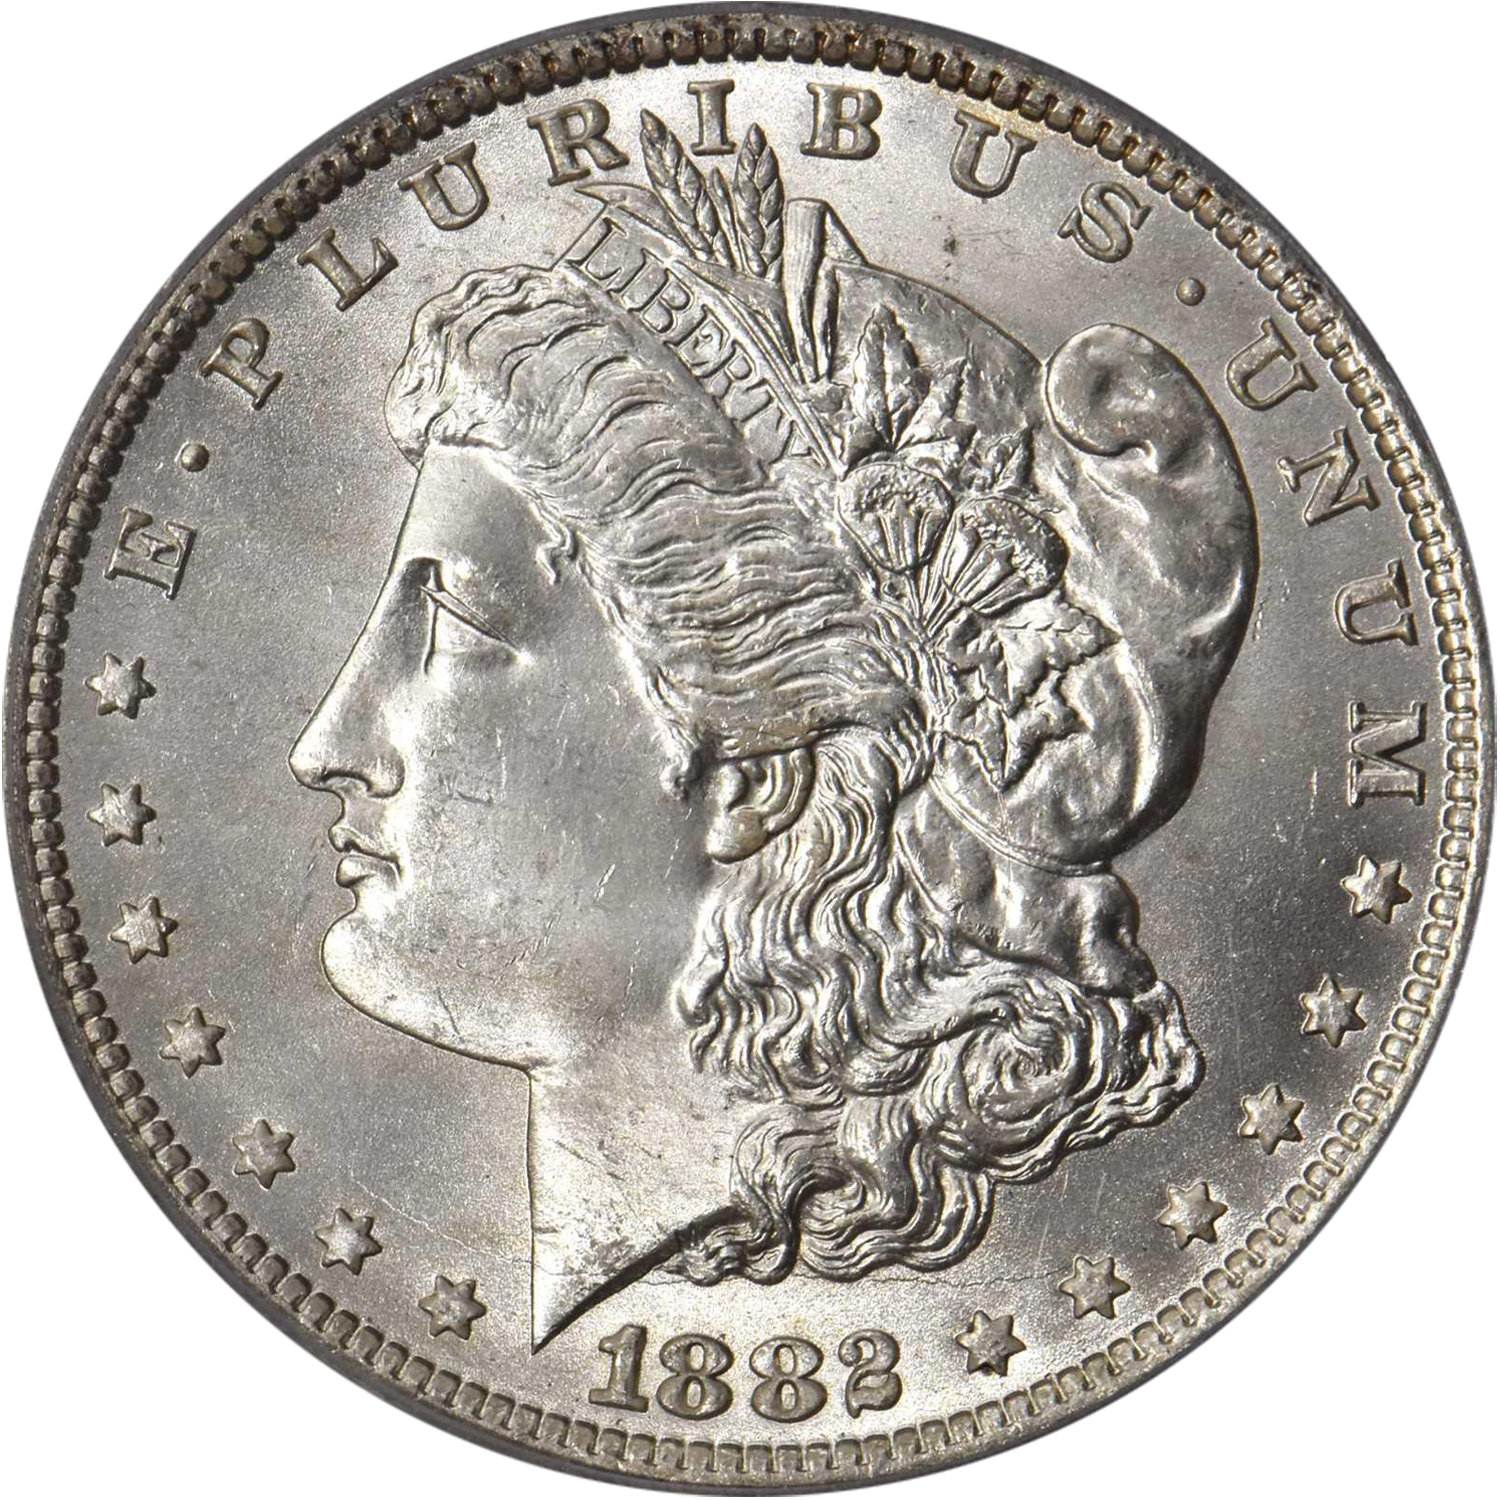 1882 new orleans mint morgan silver dollar